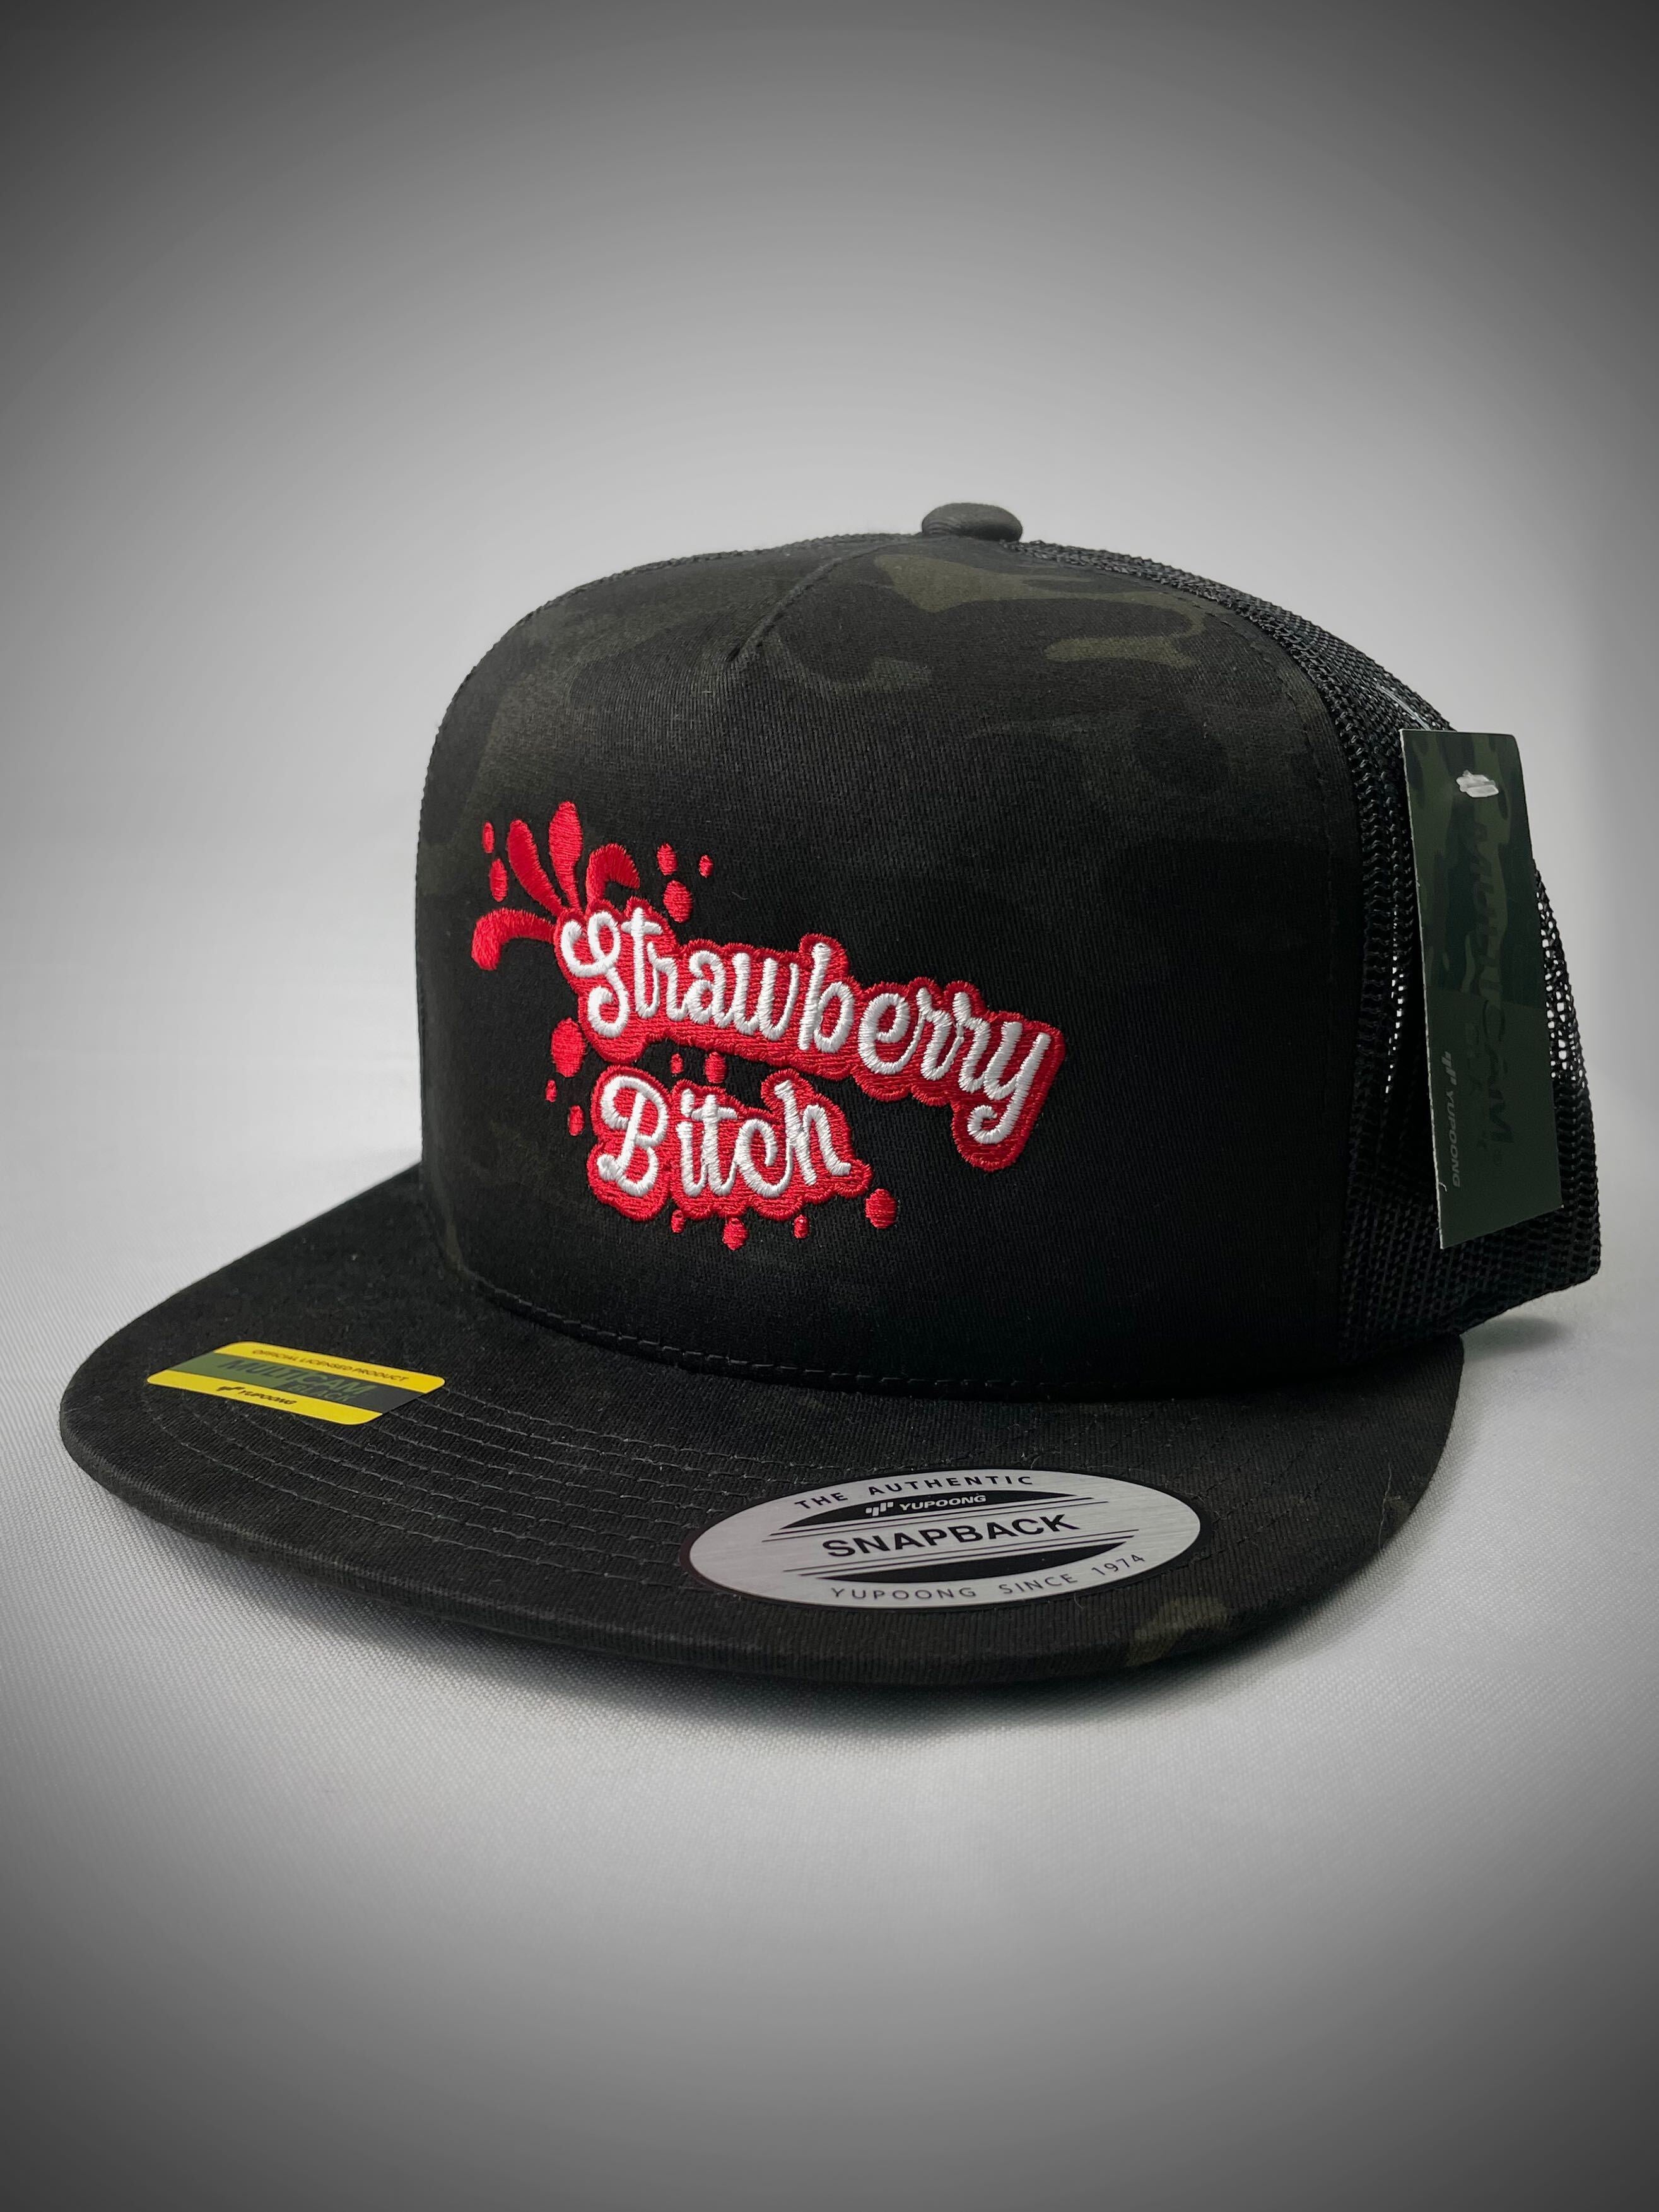 Strawberry Bitch Snapback Hat (Black Camo)